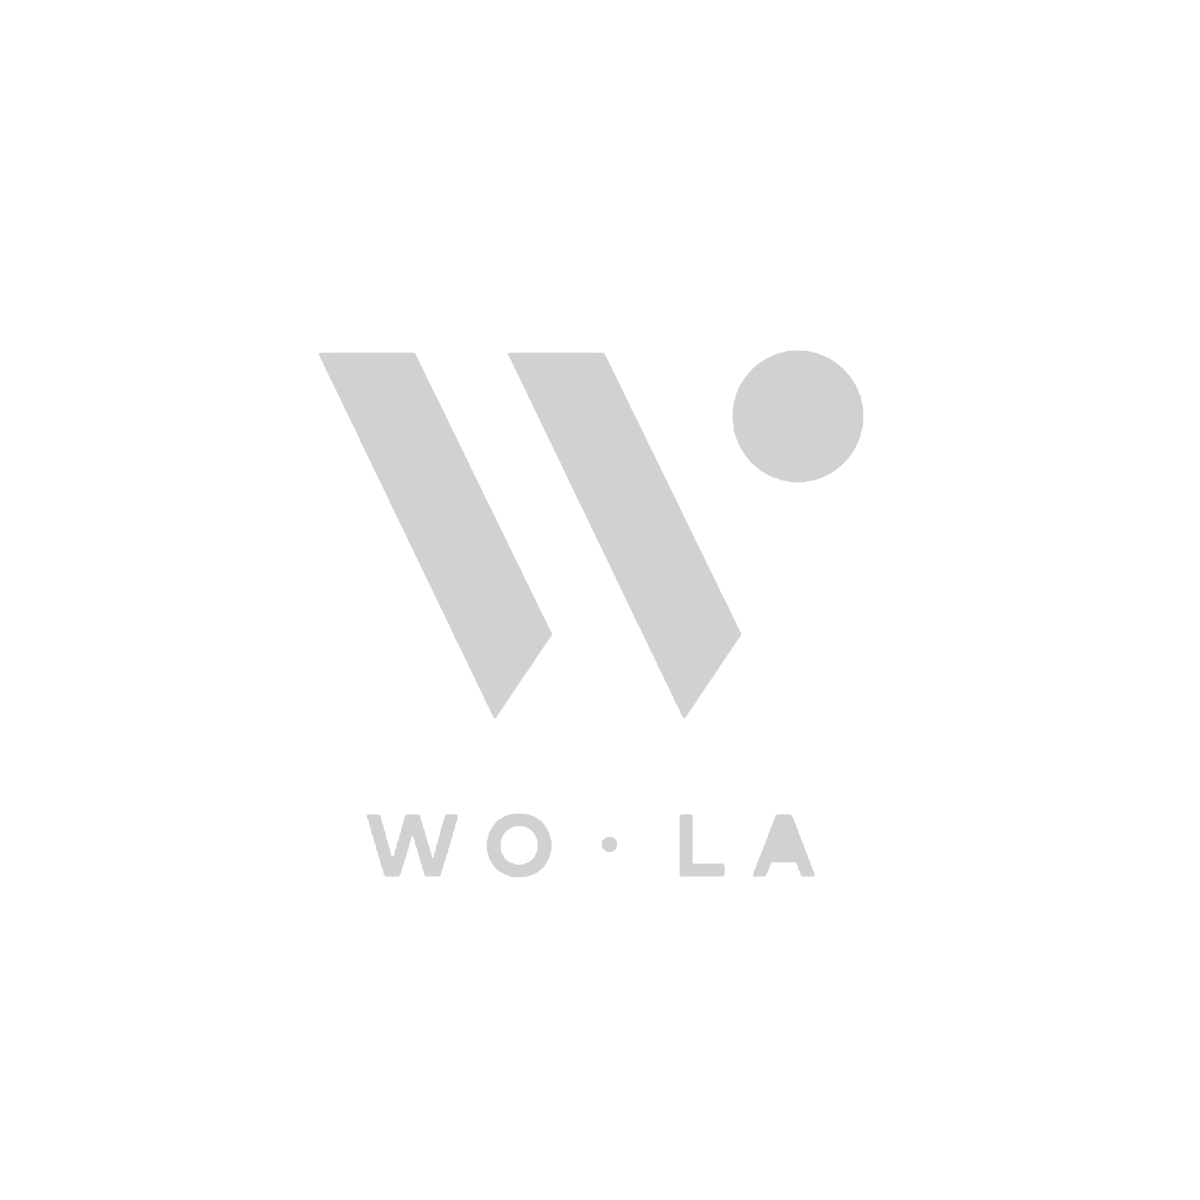 Wola Logo.png